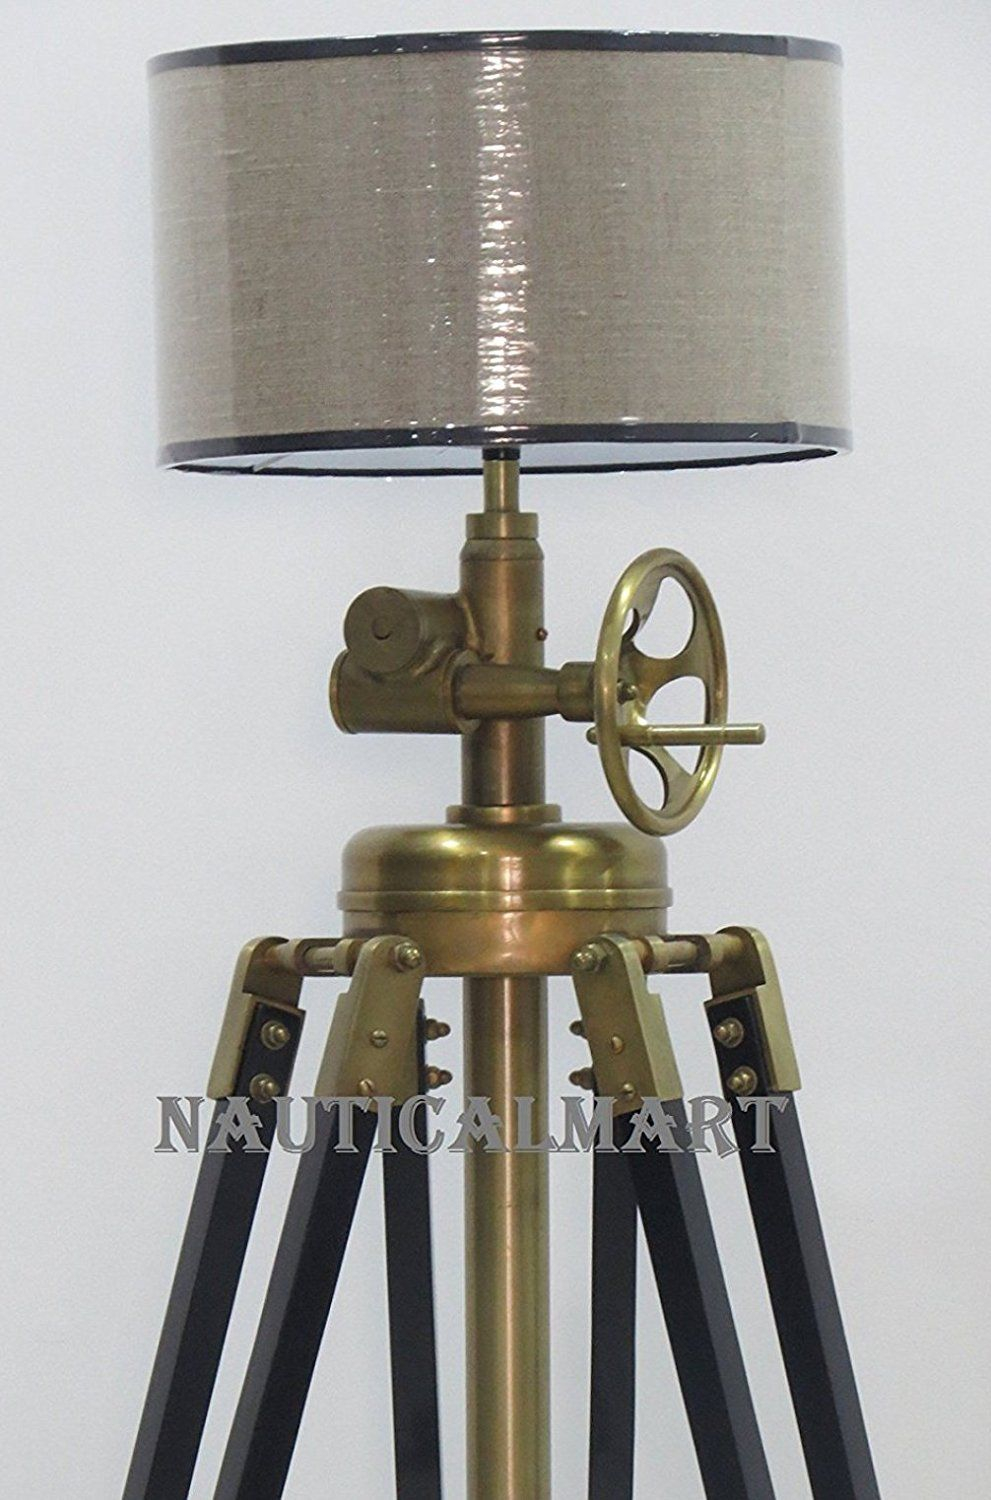 Al Nurayn Nautical Royal Marine Tripod Floor Lamp pertaining to sizing 991 X 1500